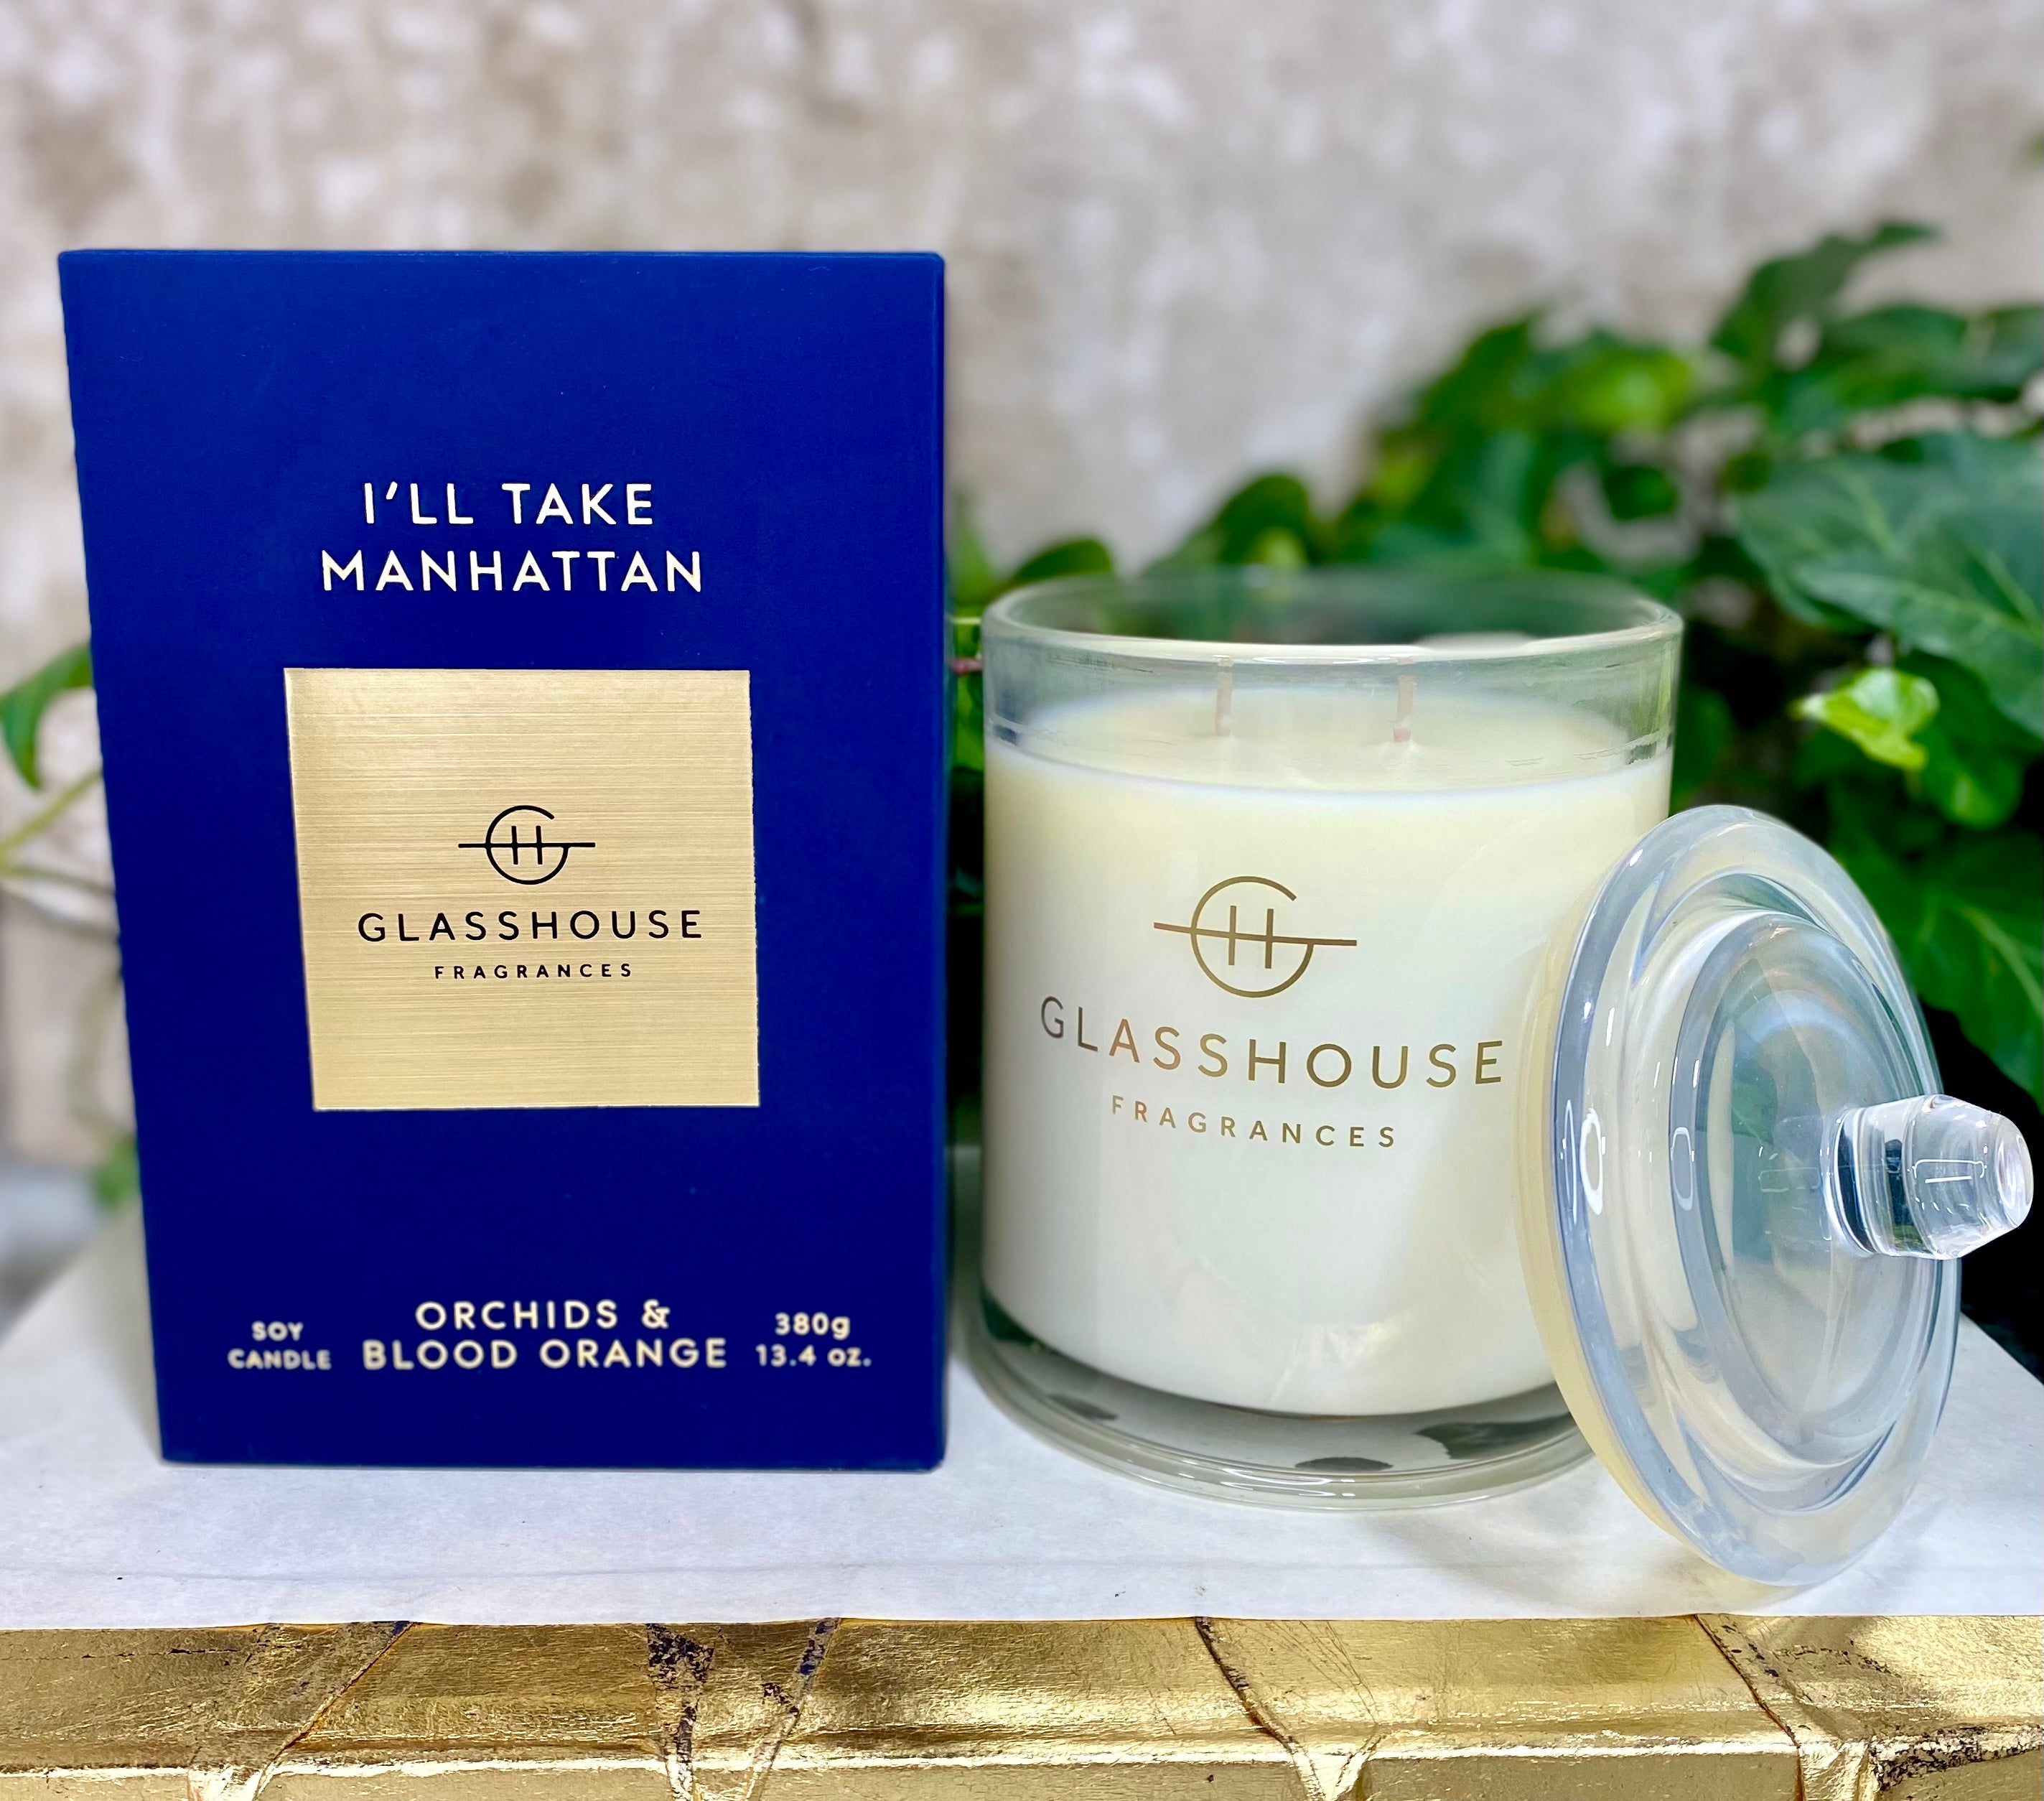 Glasshouse “I'll Take Manhattan” candle 13.4 oz.